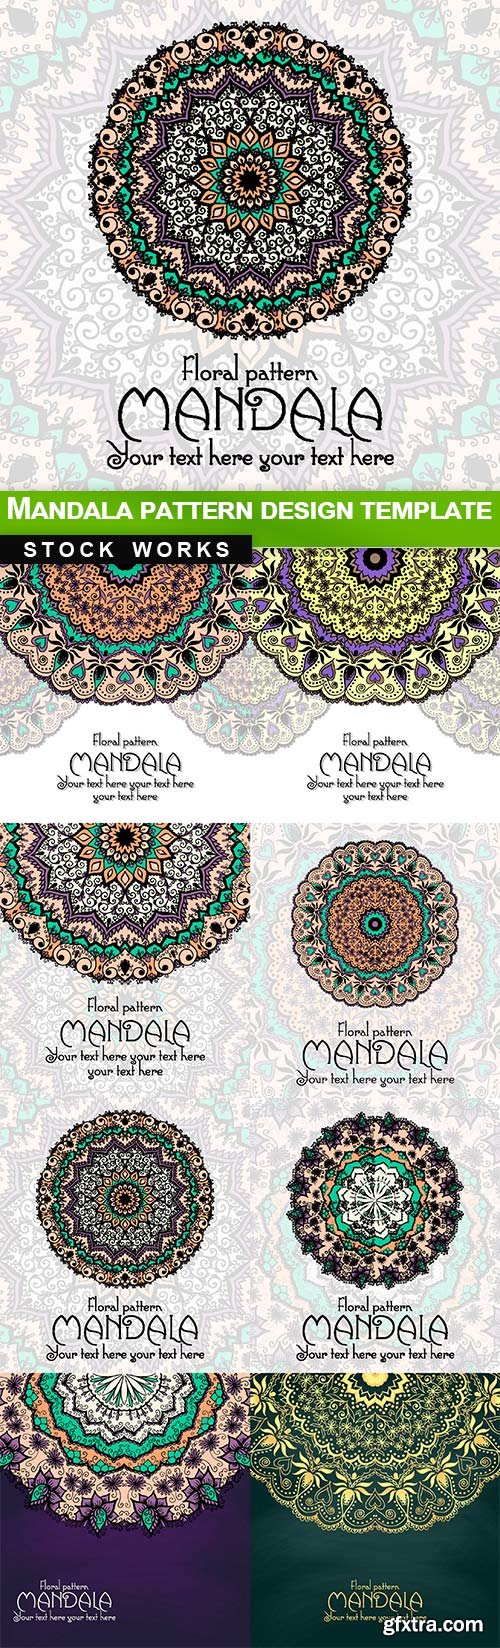 Mandala pattern design template - 8 EPS